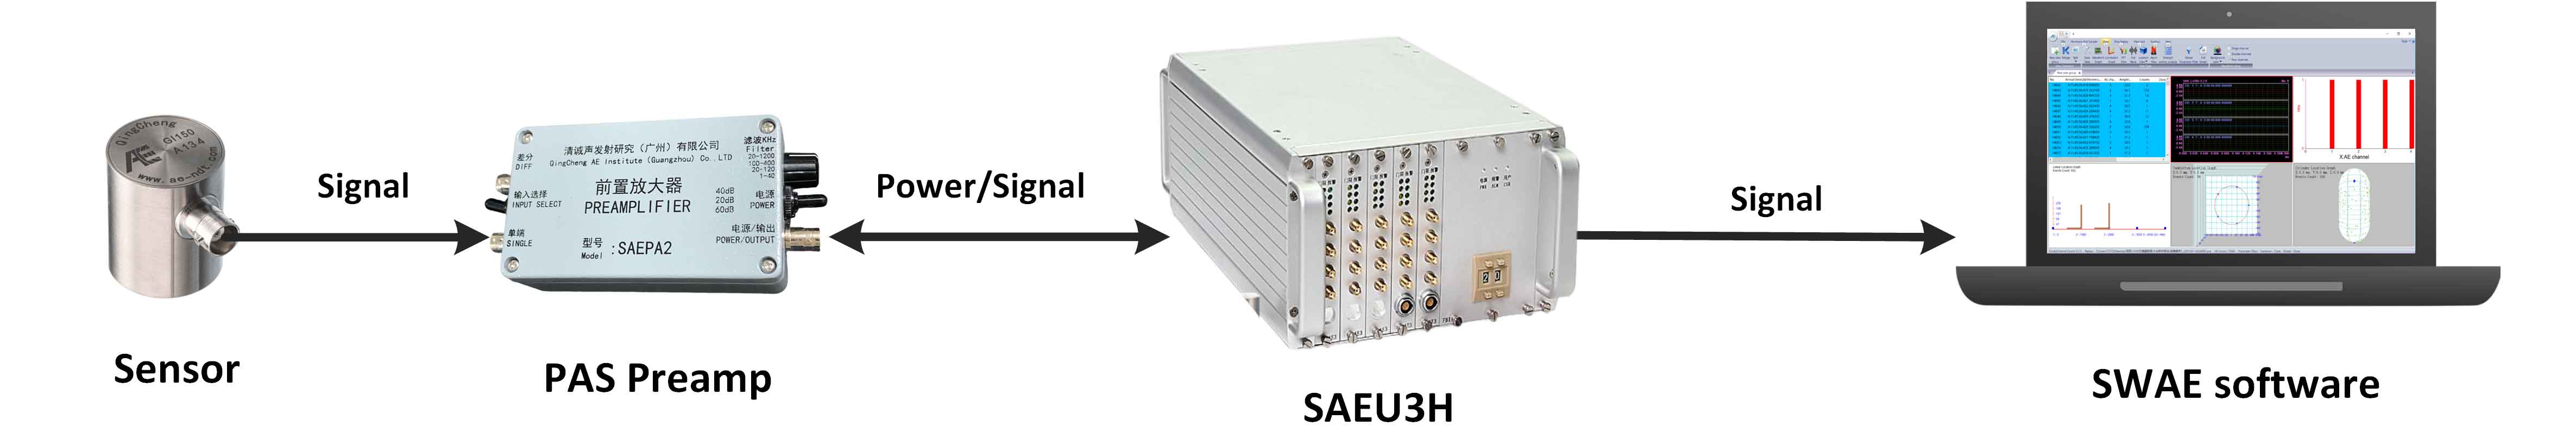 SAEU3H MULTI-CHANNEL AE SYSTEM, SEAU3H AE system supports USB3.0 (standard)